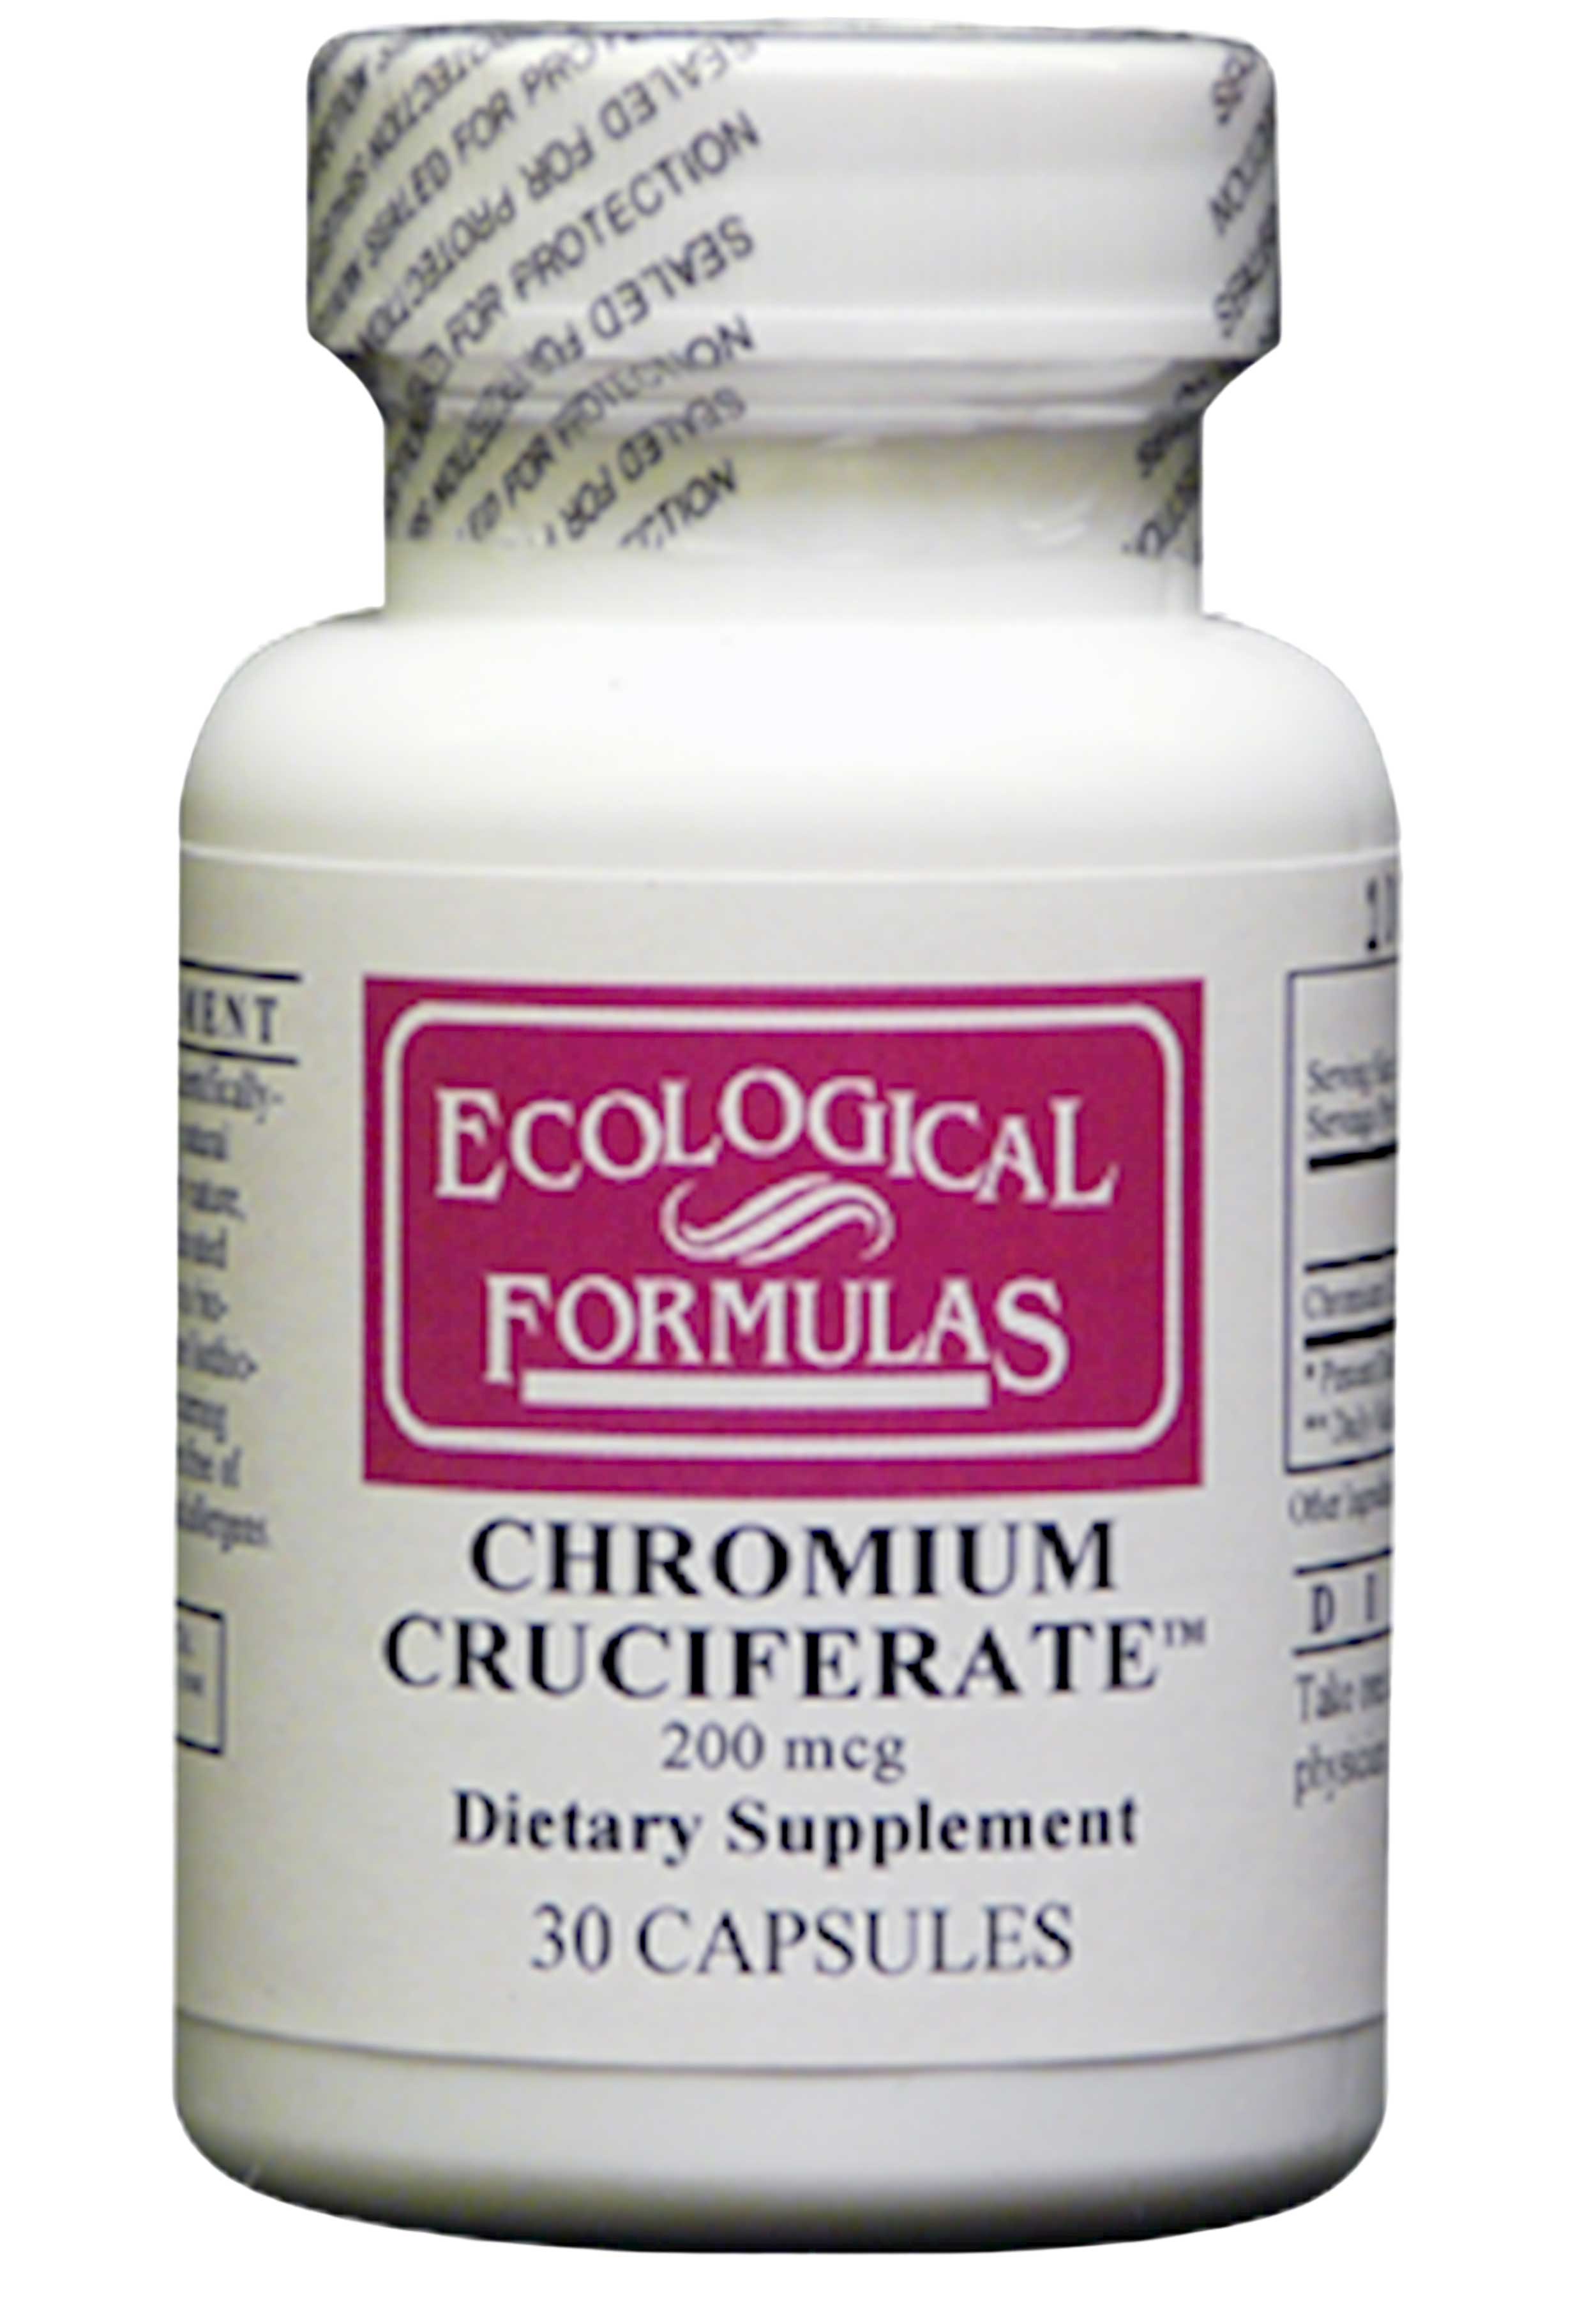 Ecological Formulas/Cardiovascular Research Chromium Cruciferate 200 mcg